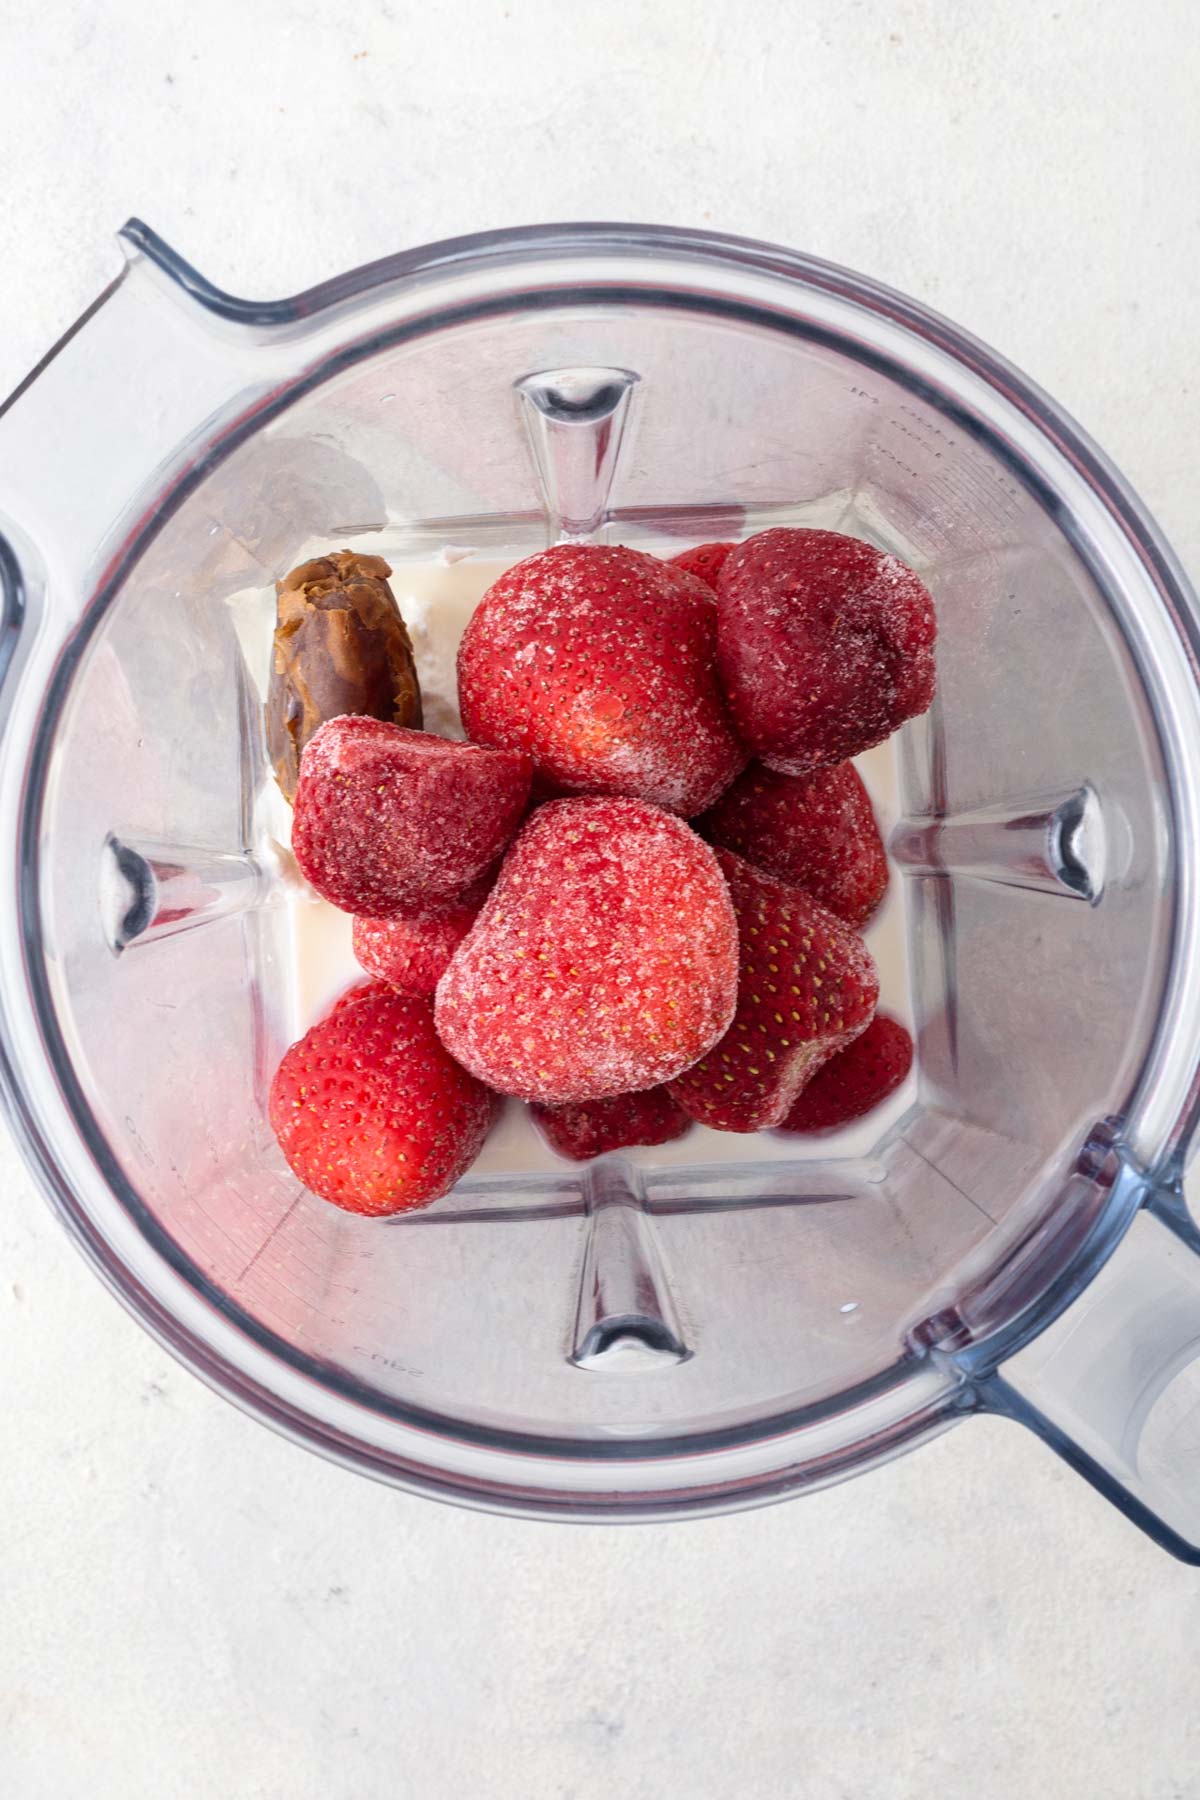 Strawberry smoothie ingredients in a blender.